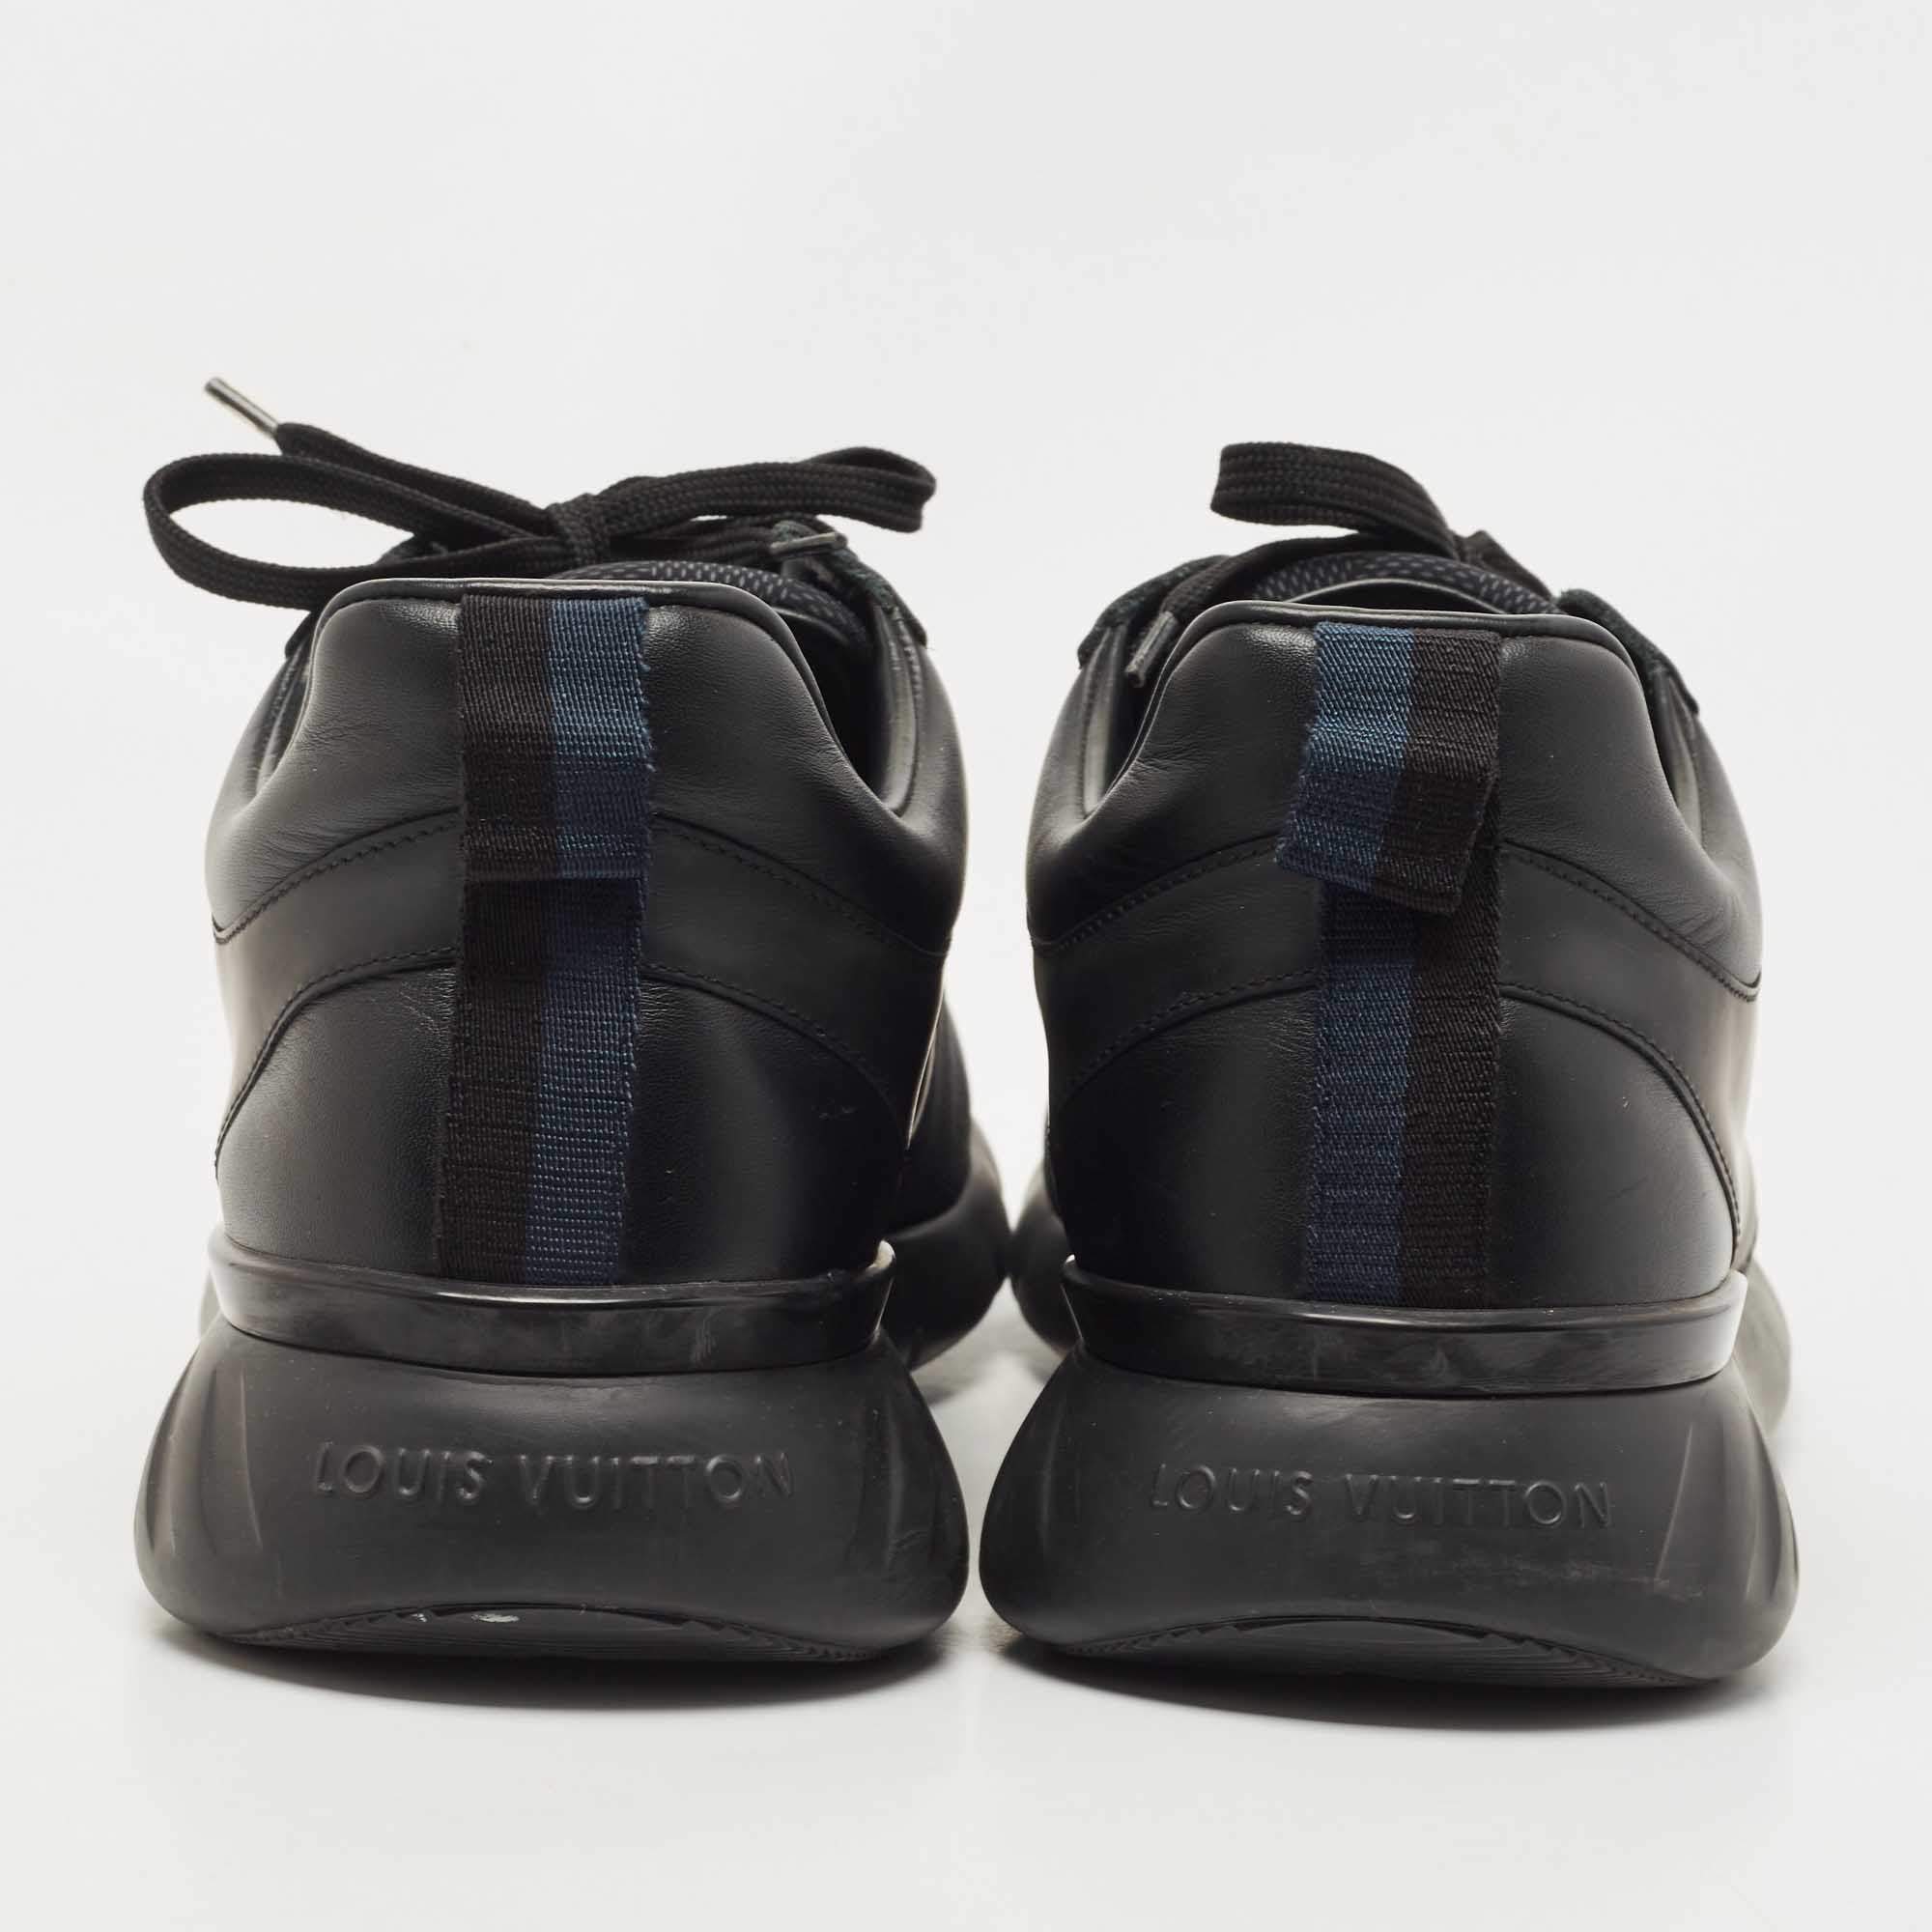 Louis Vuitton Black Damier Nylon and Leather Fastlane Low Top Sneakers Size 43